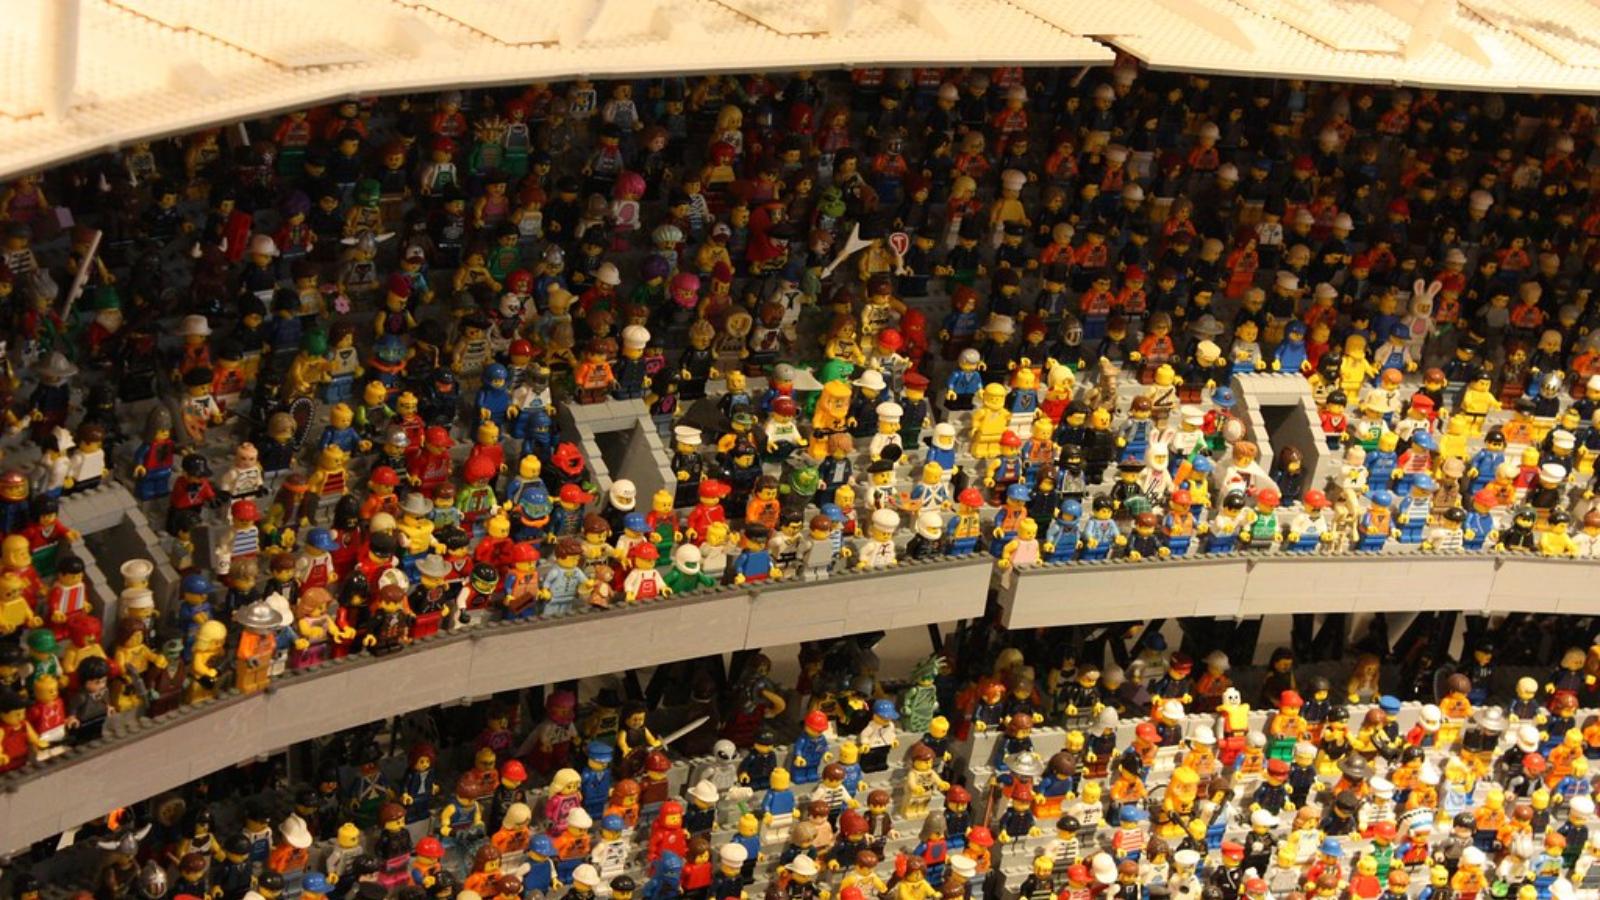 Lego stadium crowd